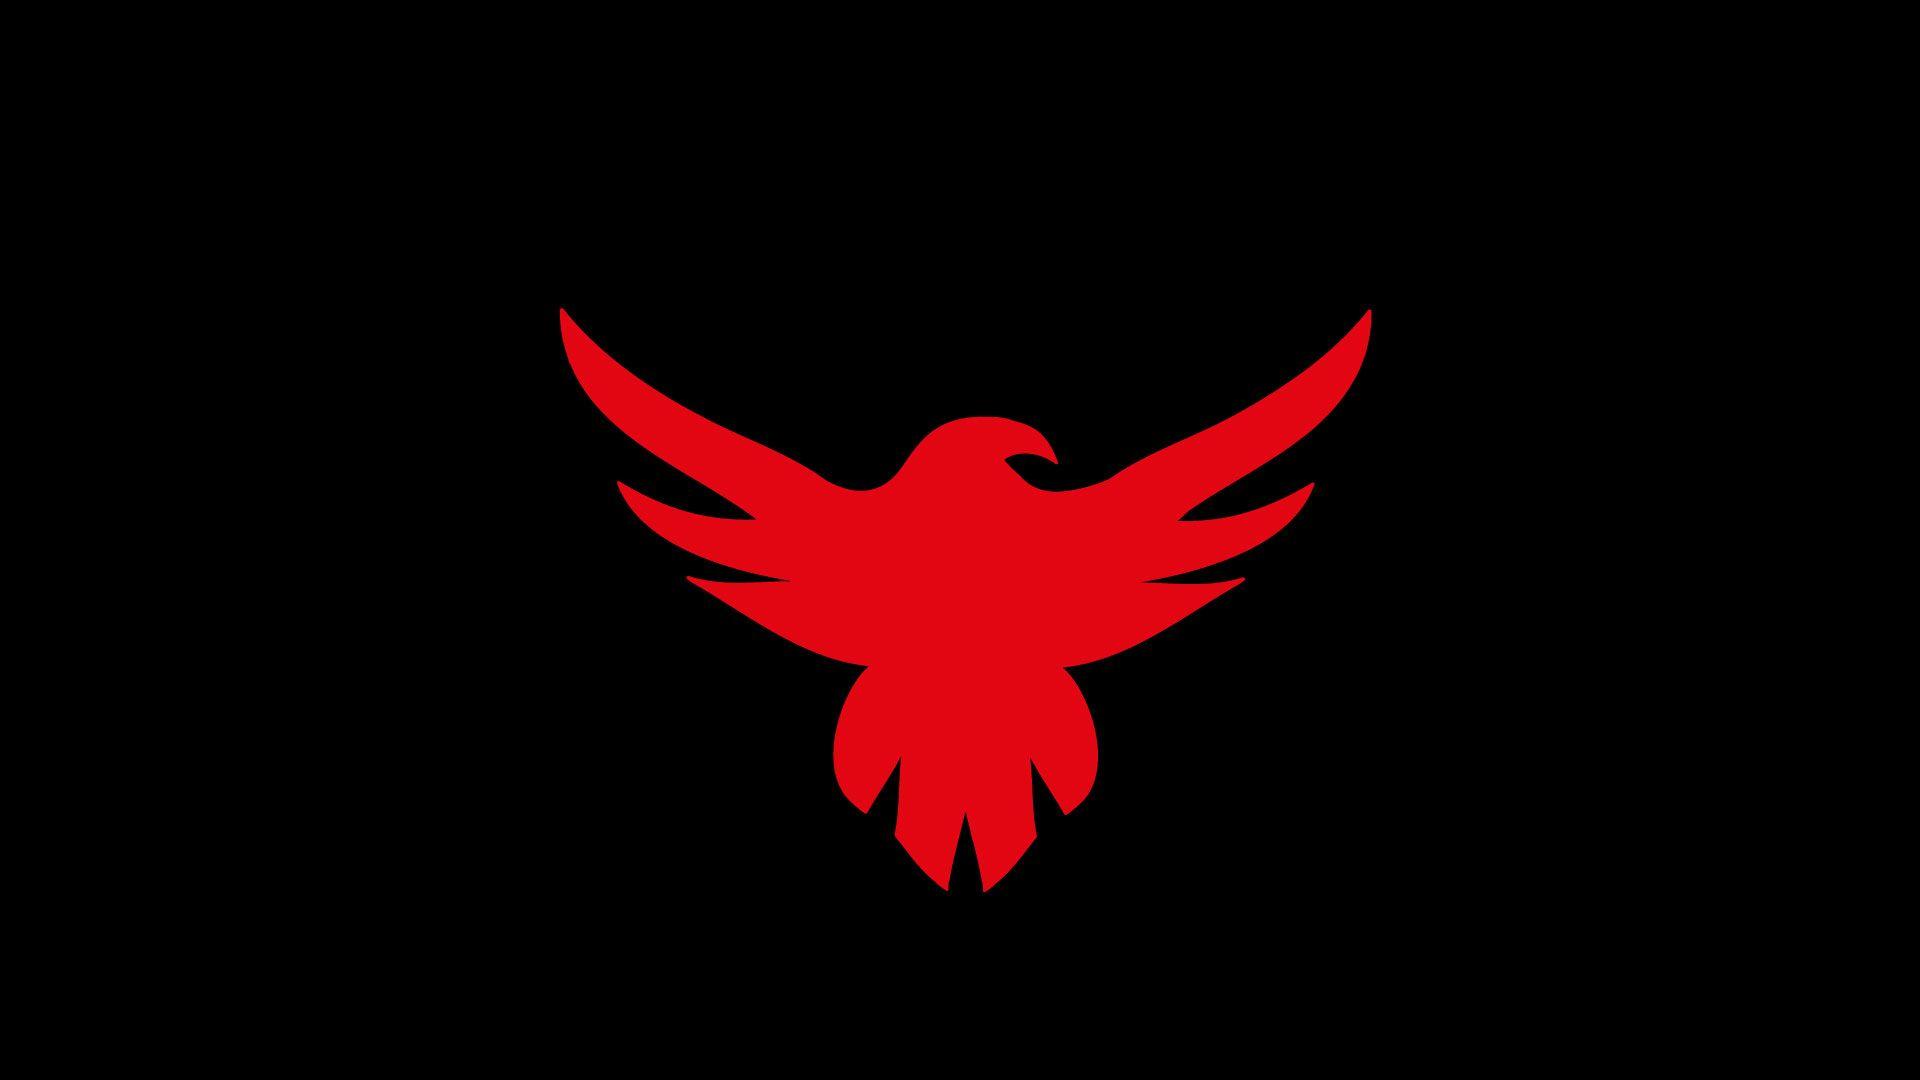 Black and Red Eagles Logo - Eagles Read | www.picsbud.com